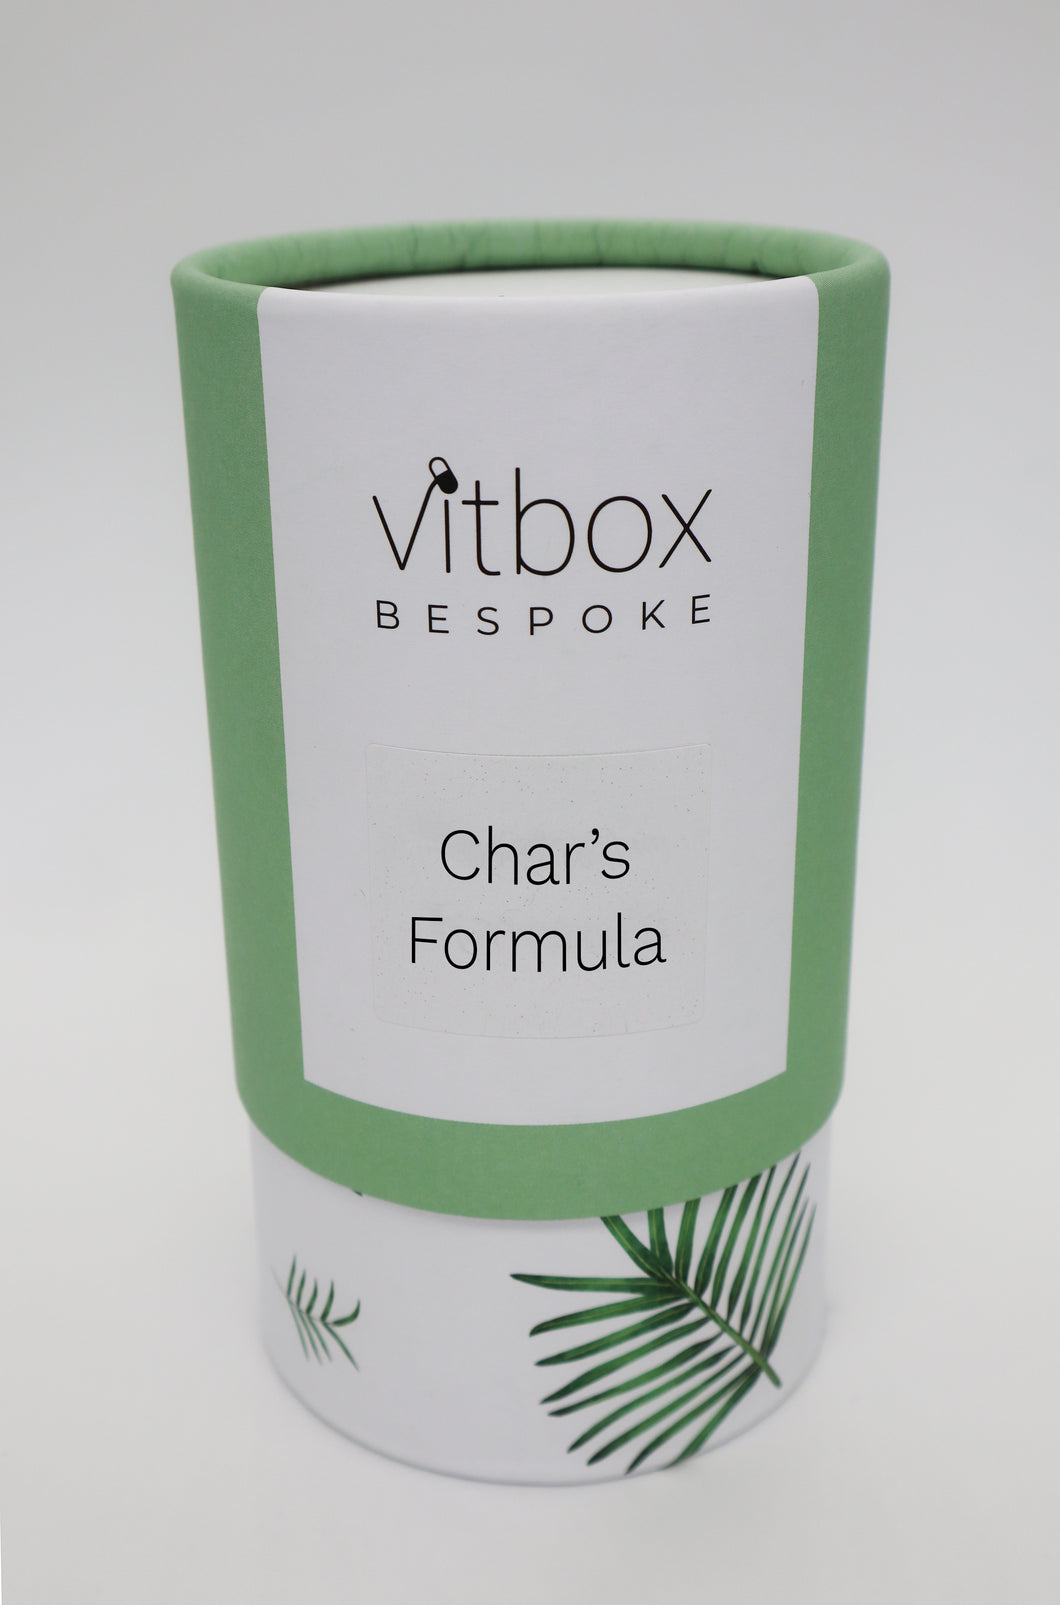 Char's Vitbox Bespoke